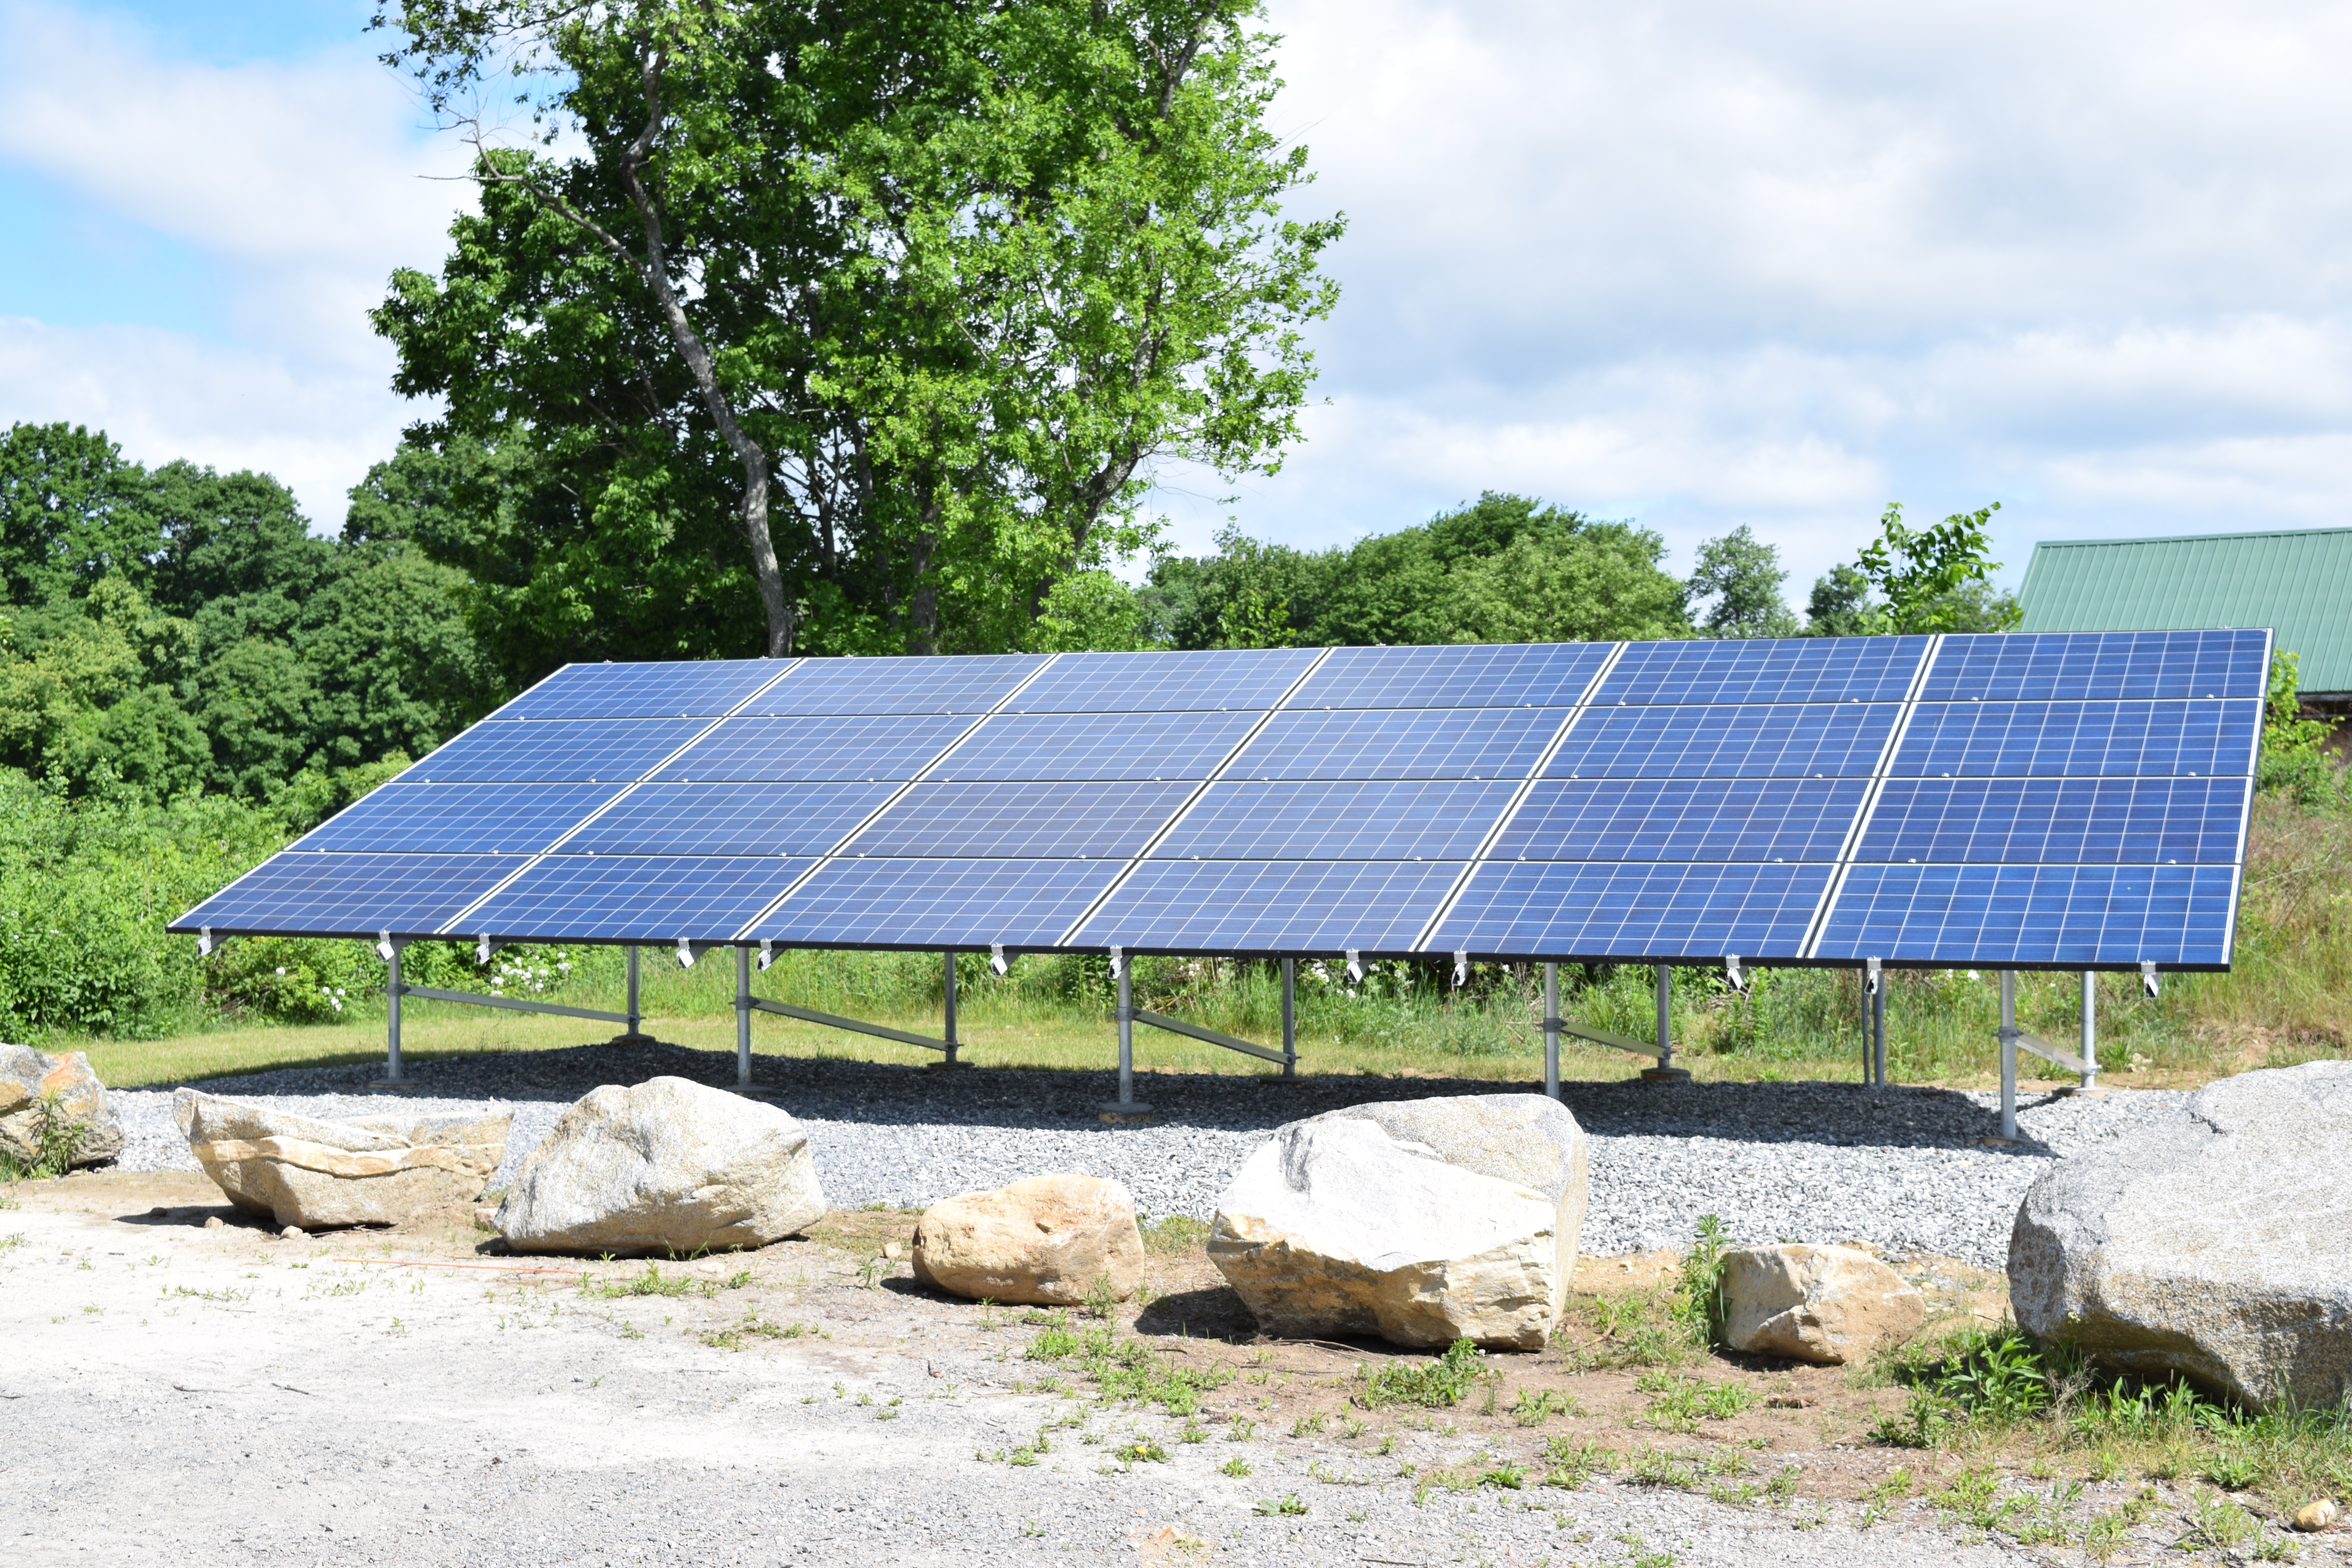 The 7 kW solar array at Thoreau Farm.